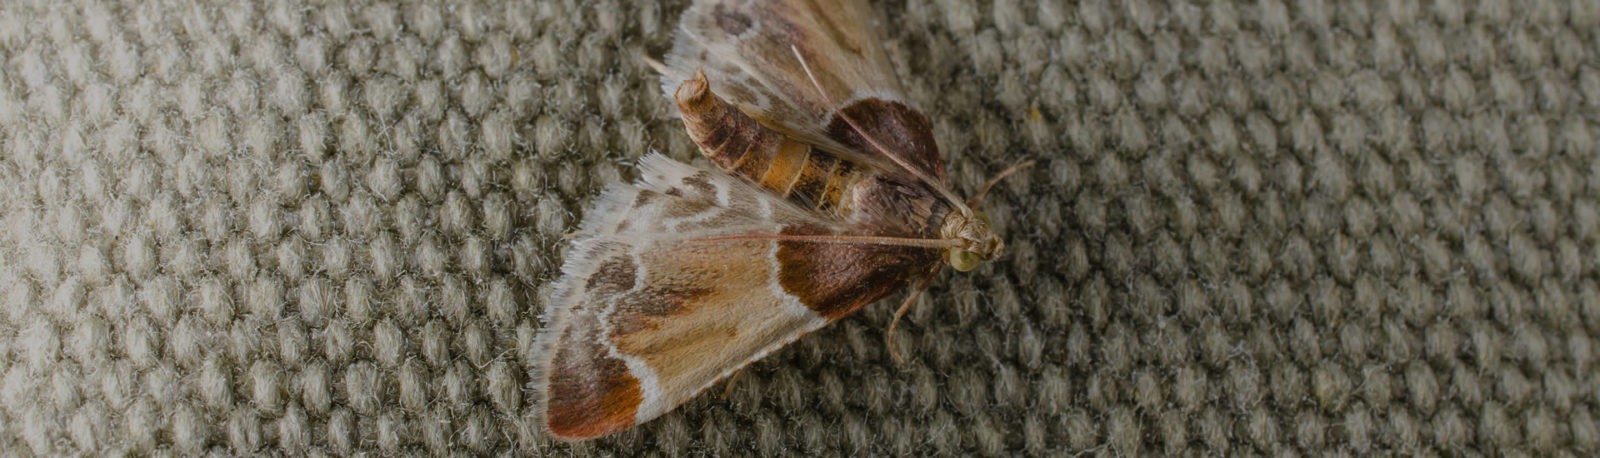 moth banner